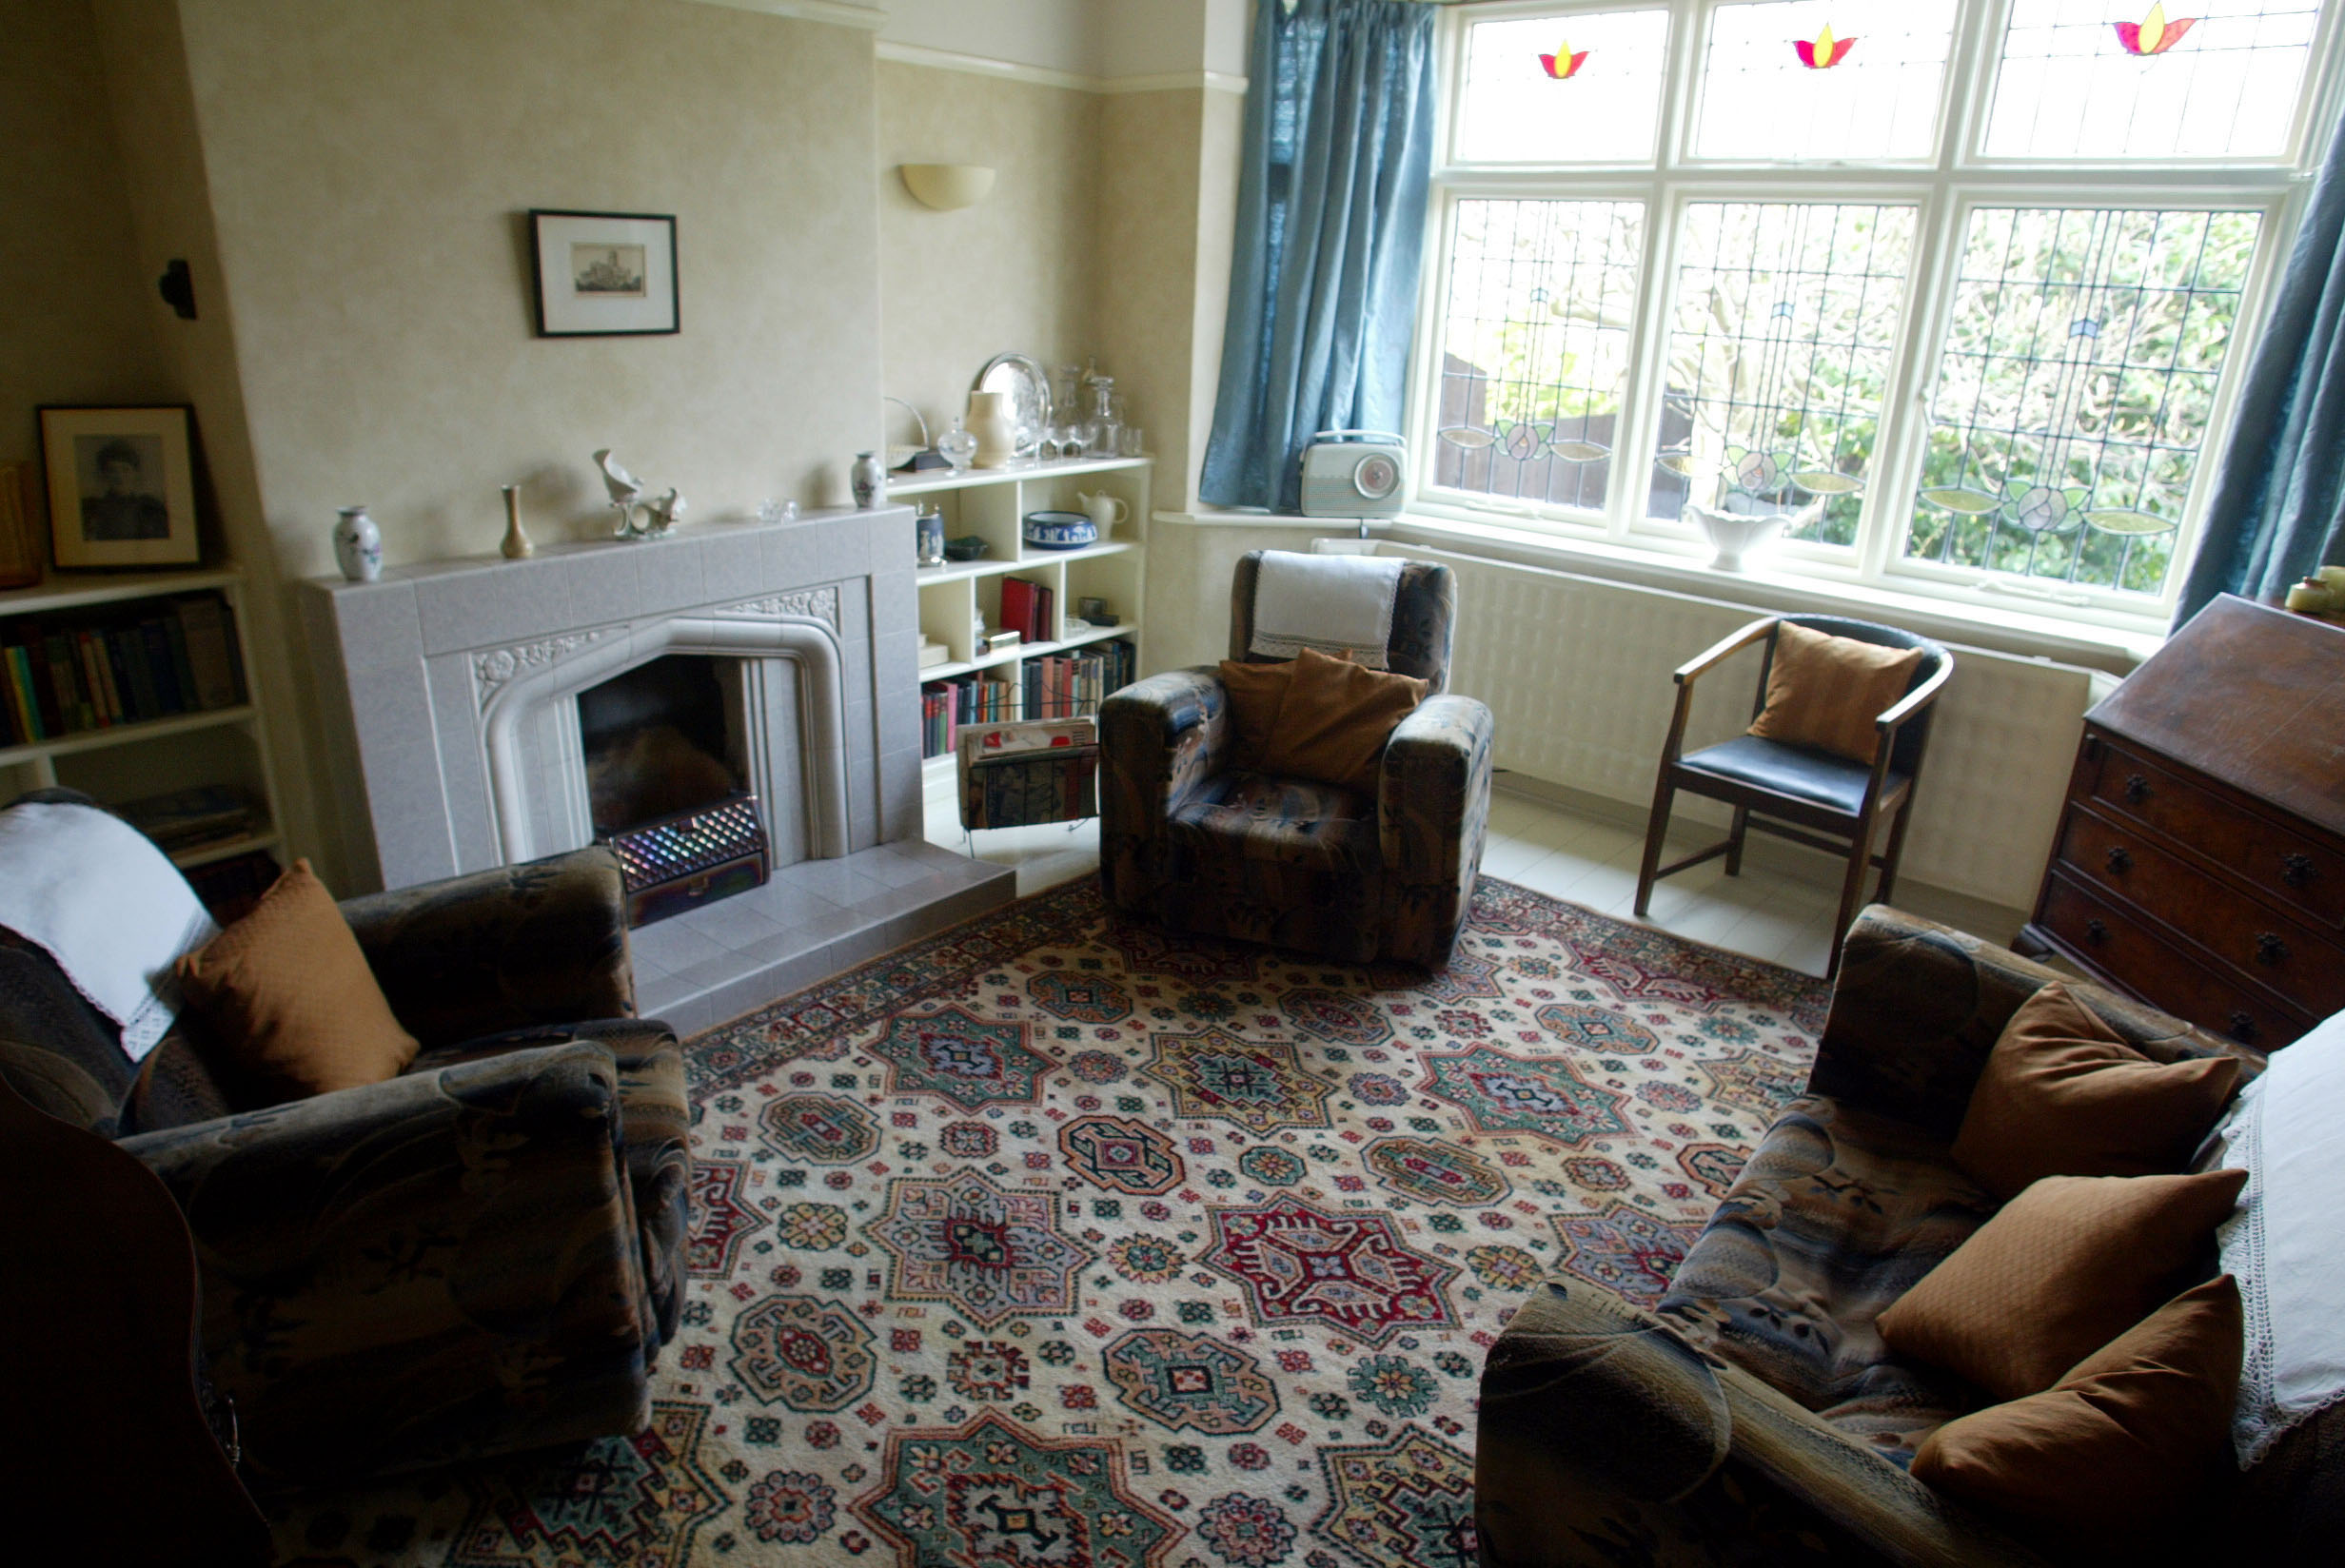 The lounge from John Lennon's childhood home